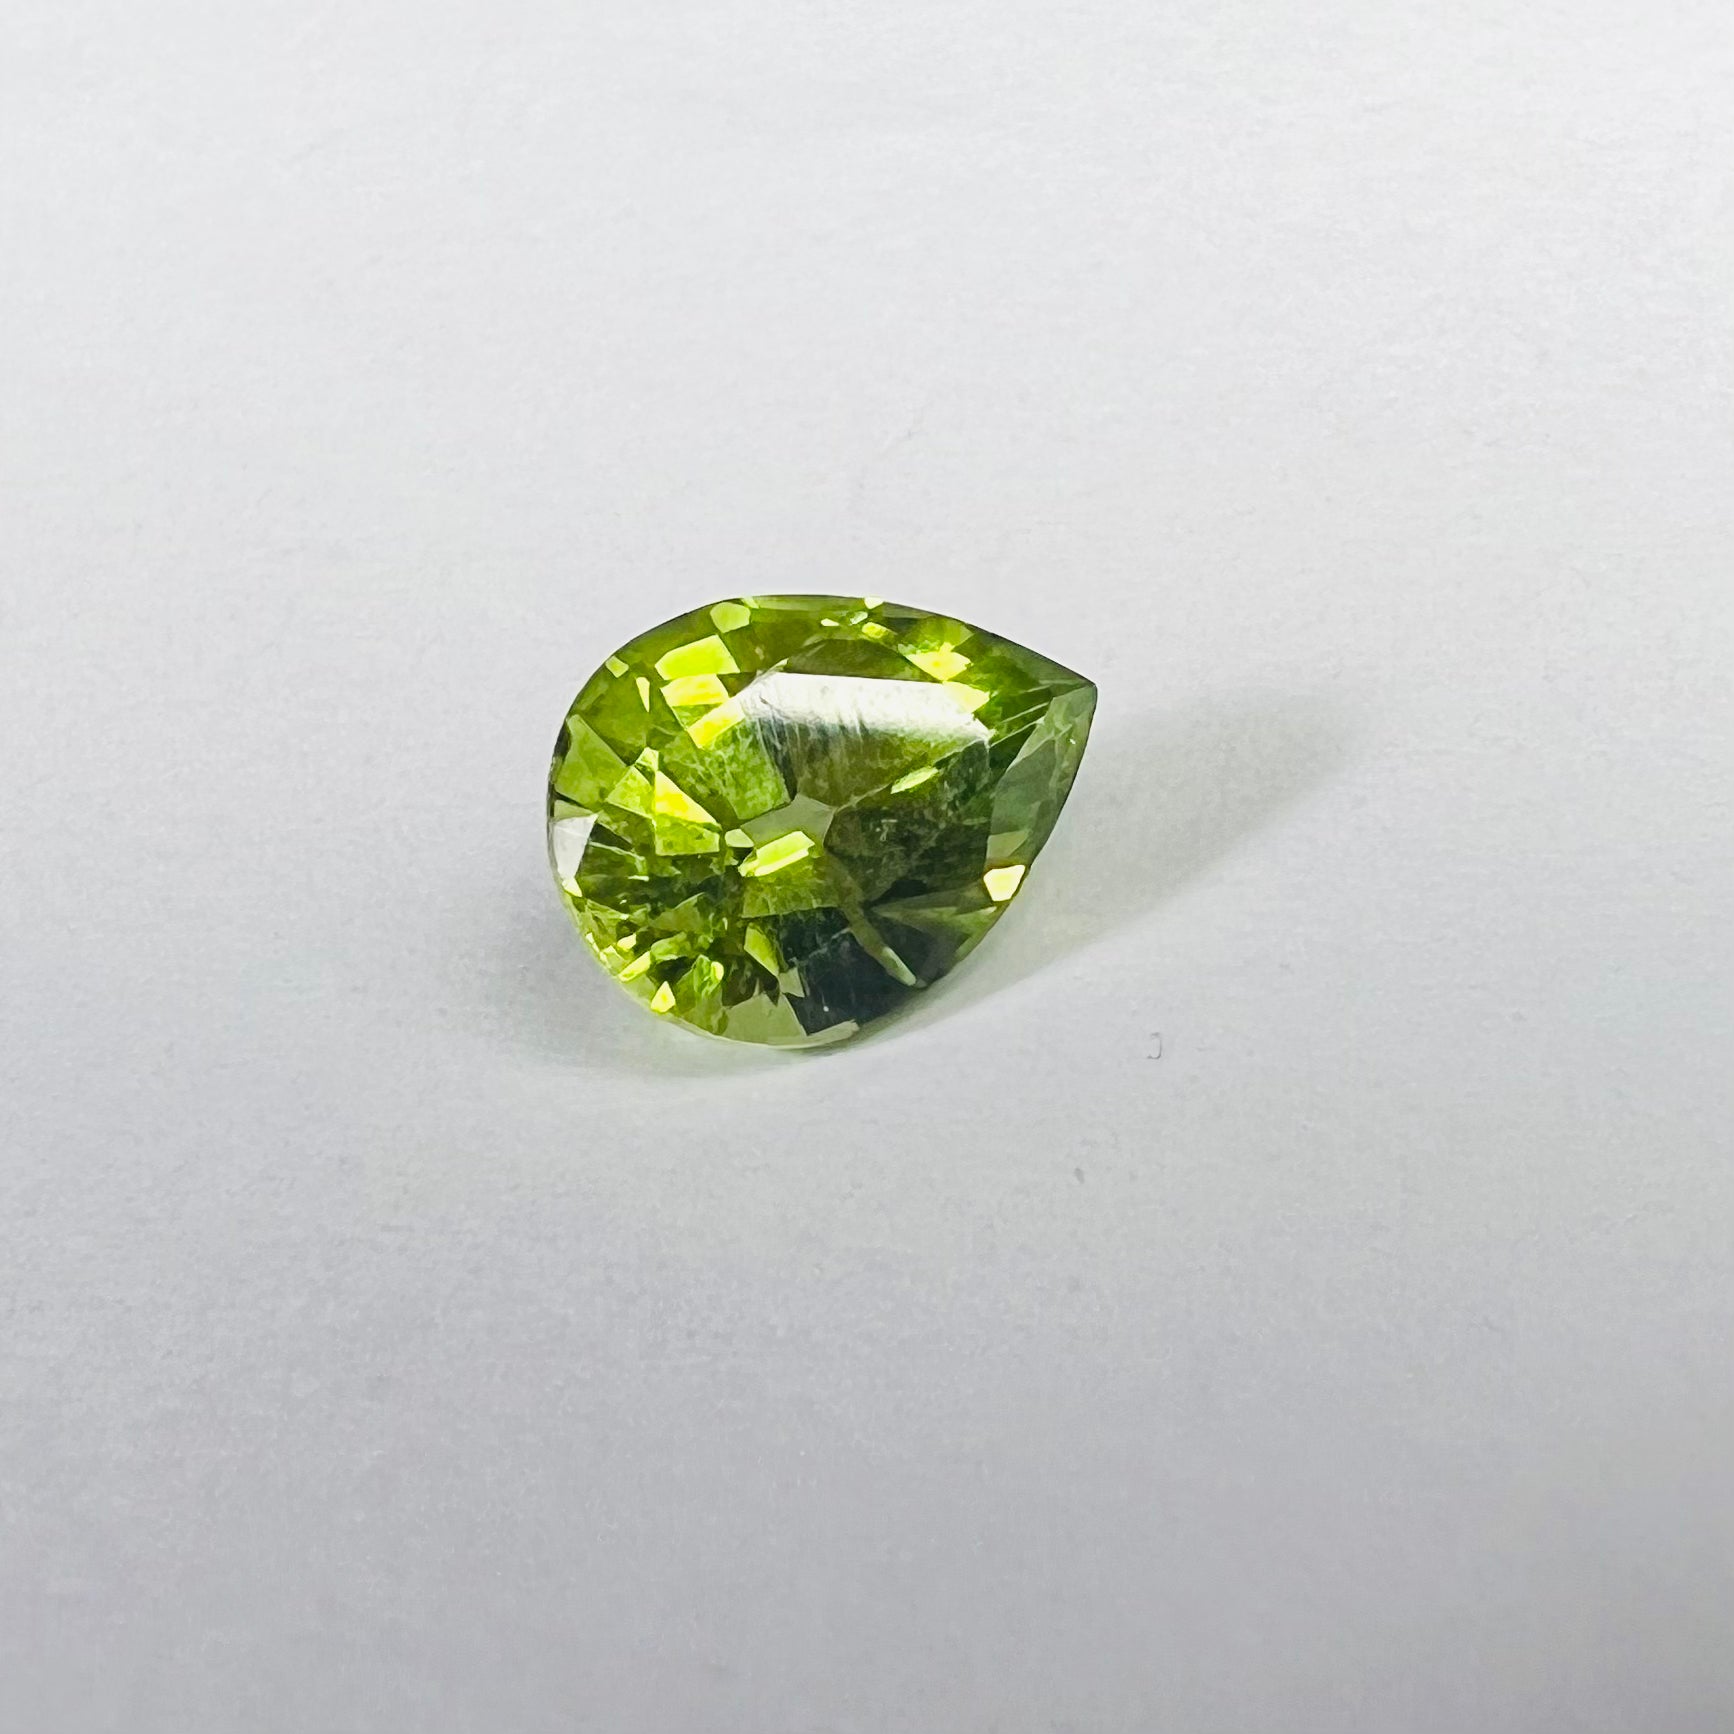 1.41 Loose Natural Pear Cut Peridot 8.06x6.20x4.48mm Earth mined Gemstone